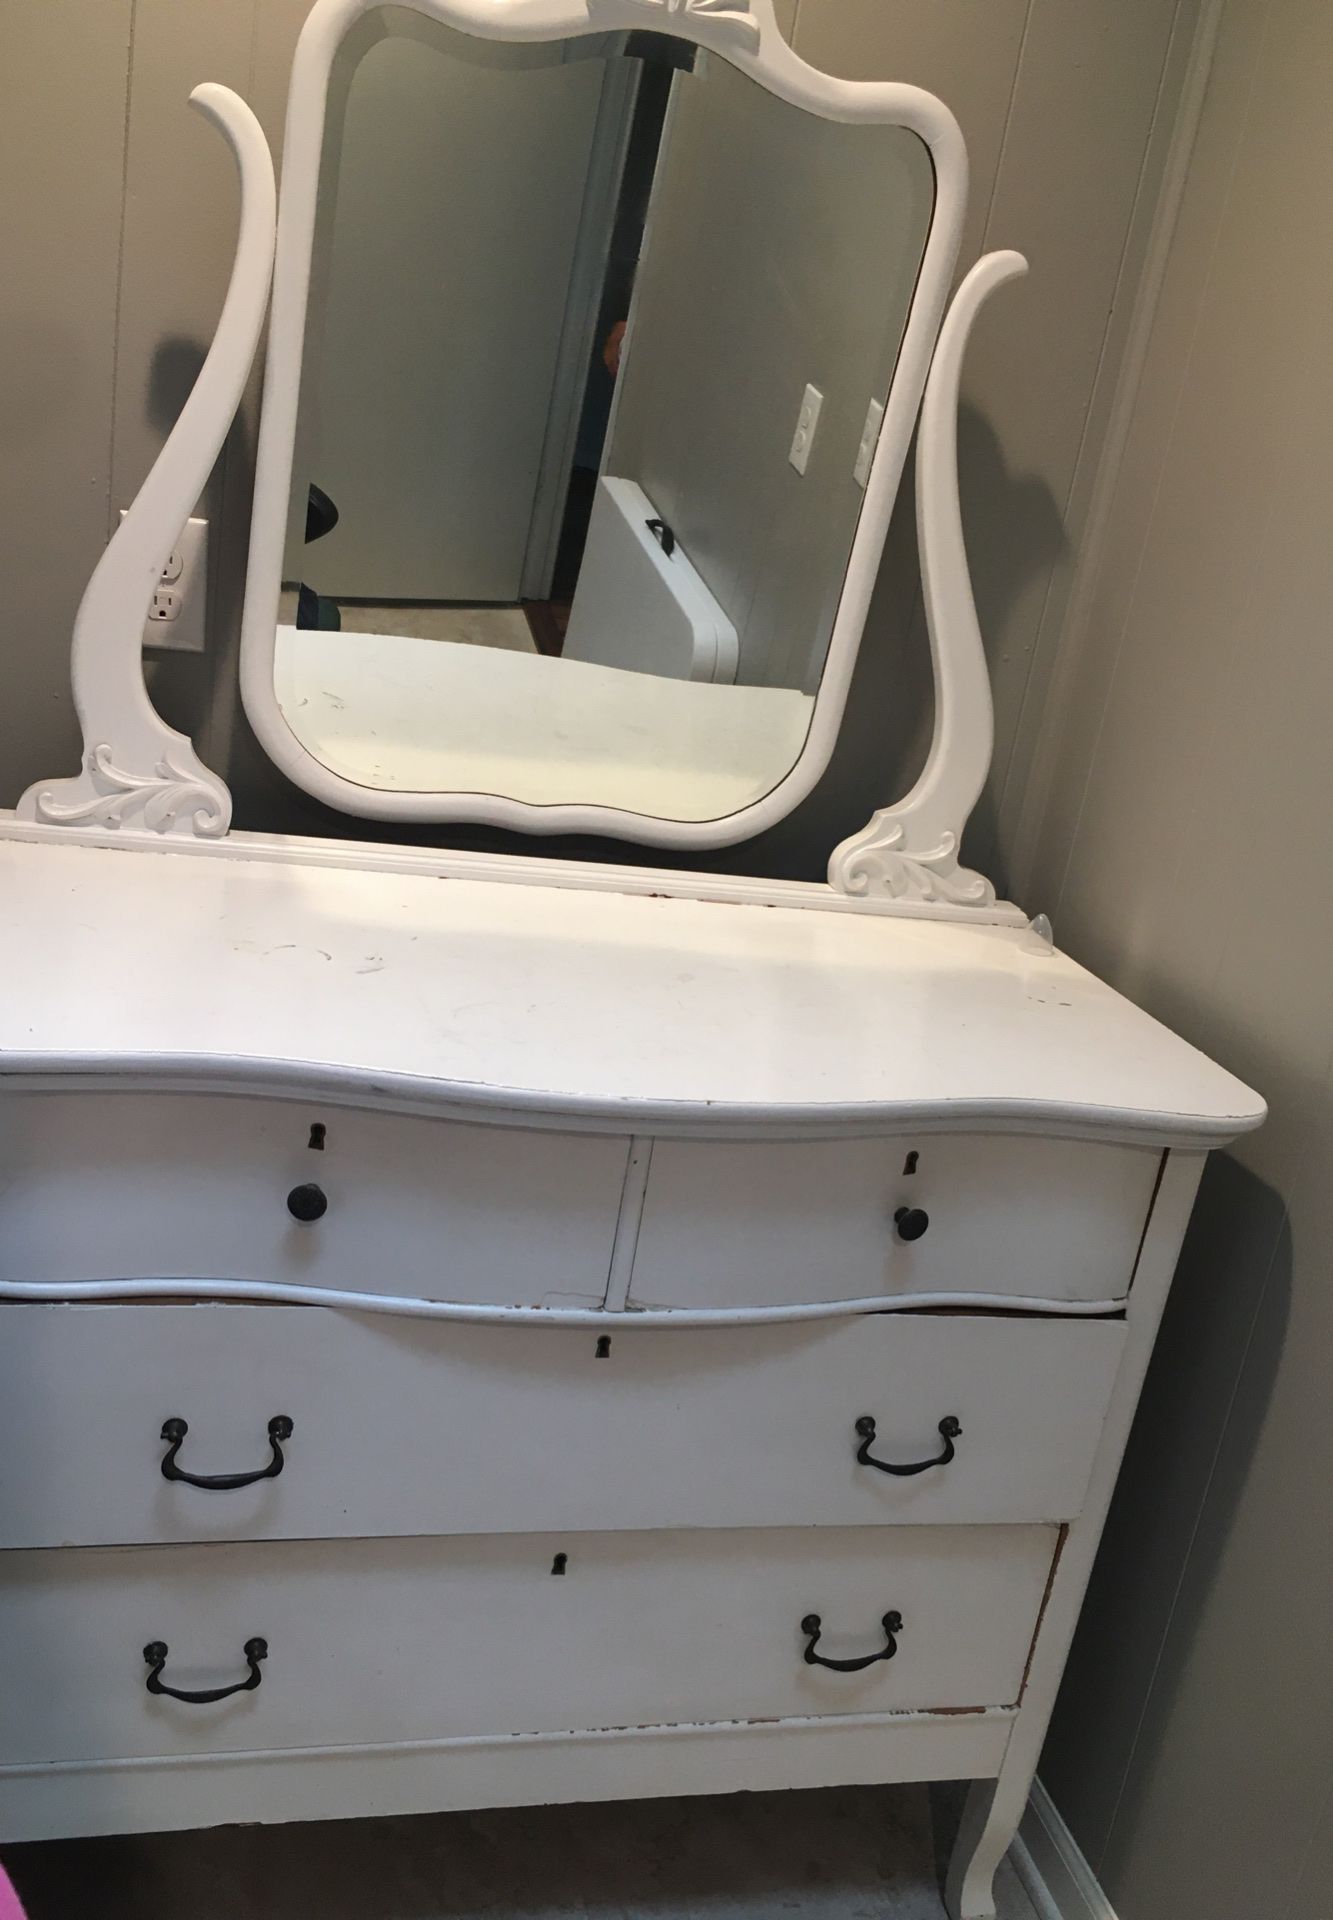 Antique vanity/dresser